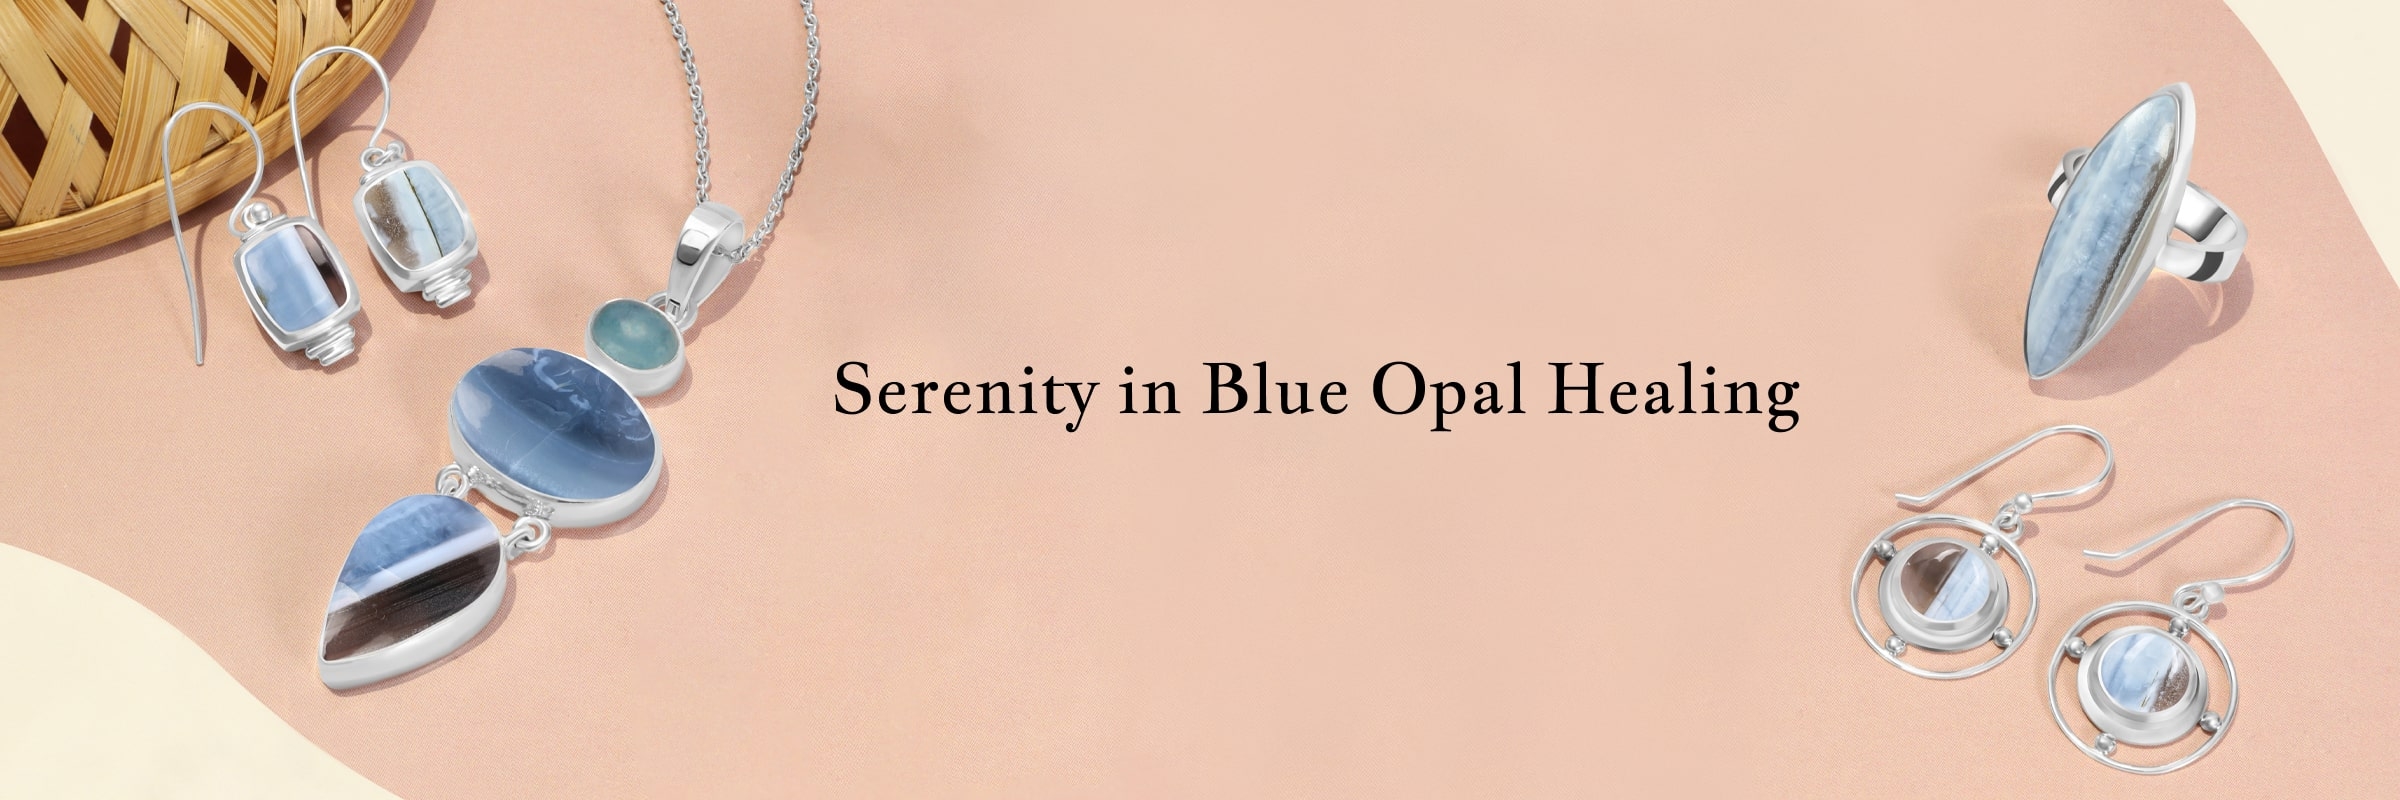 Blue opal Healing properties